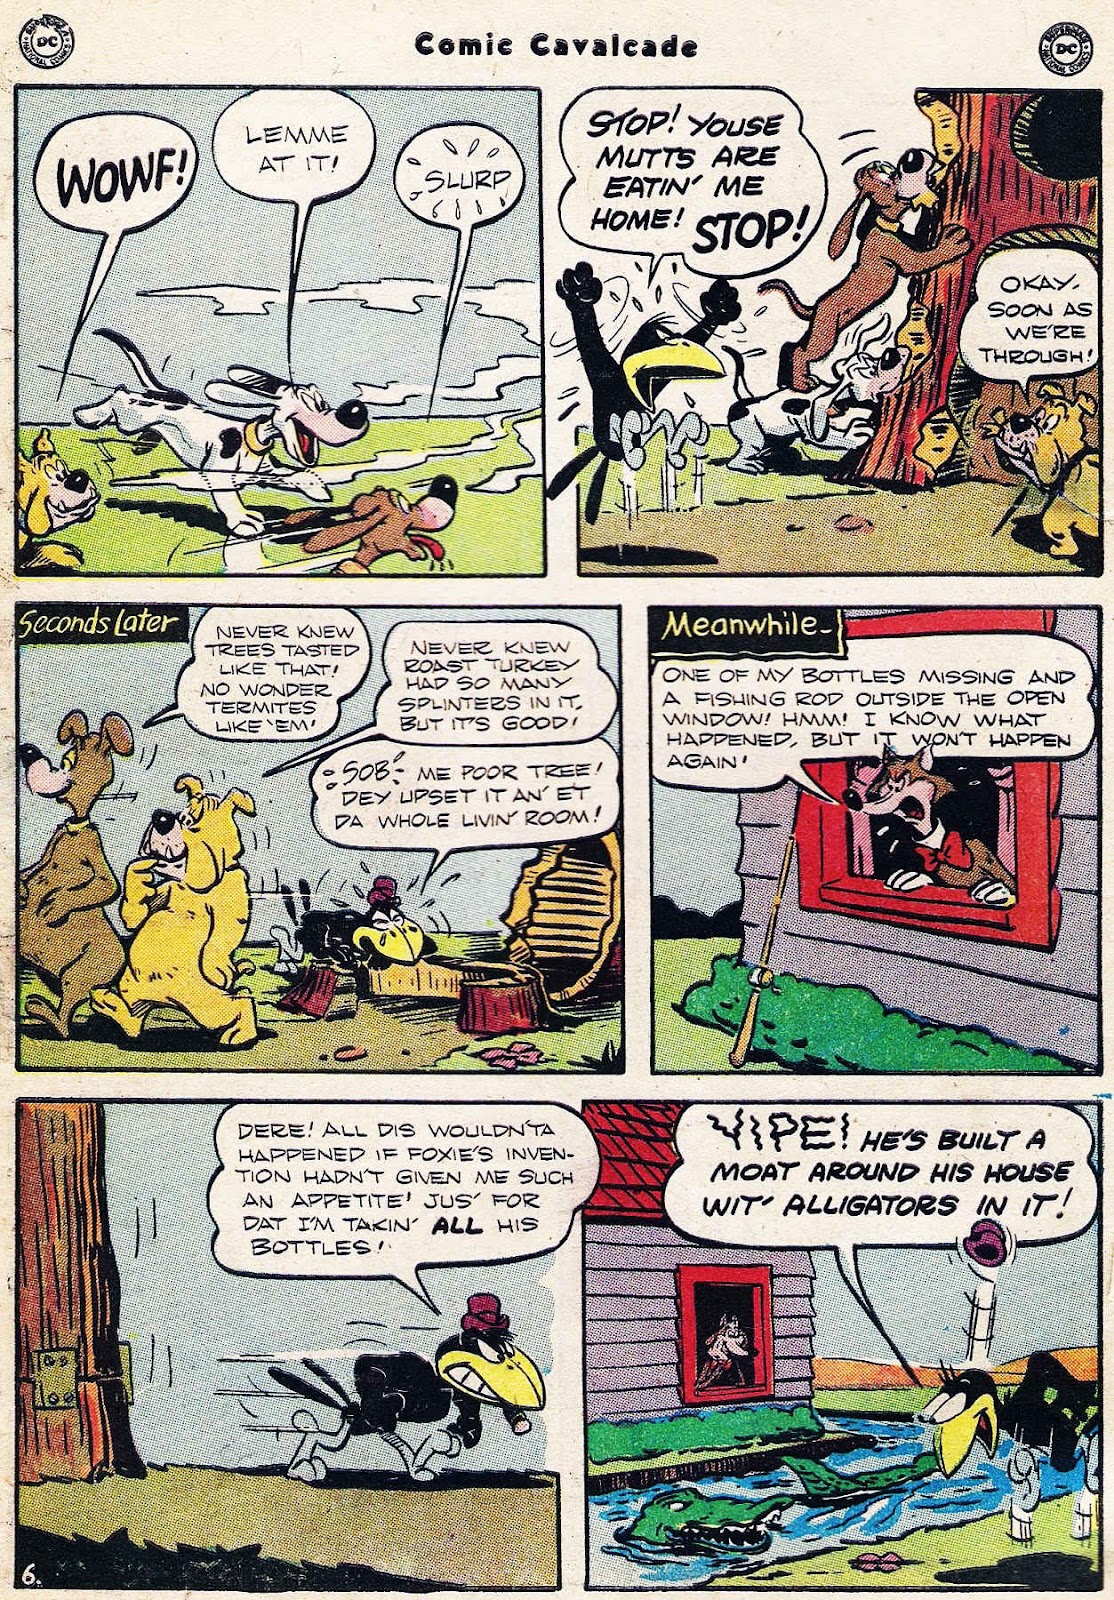 Comic Cavalcade issue 37 - Page 8